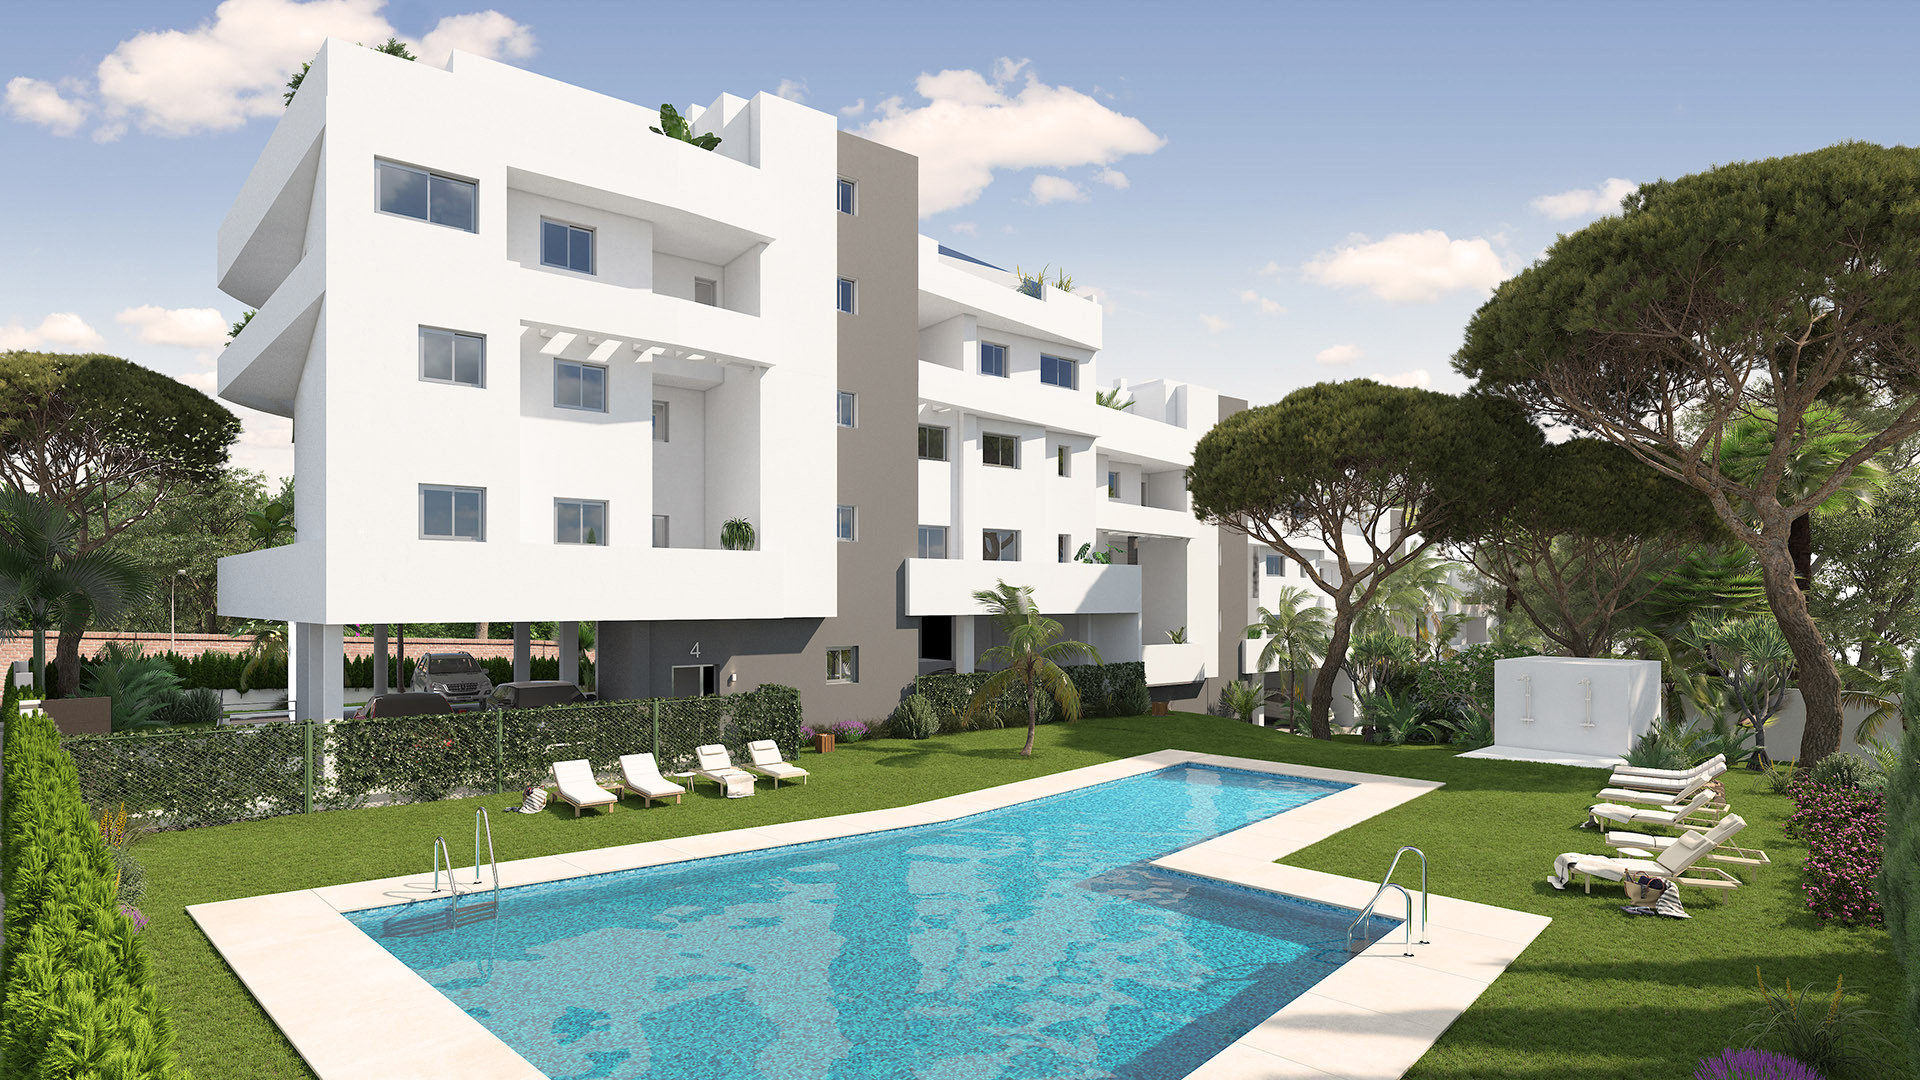 Balcón de Montemar: Flats and penthouses from 2 to 4 bedrooms located in Torremolinos. | Image 0